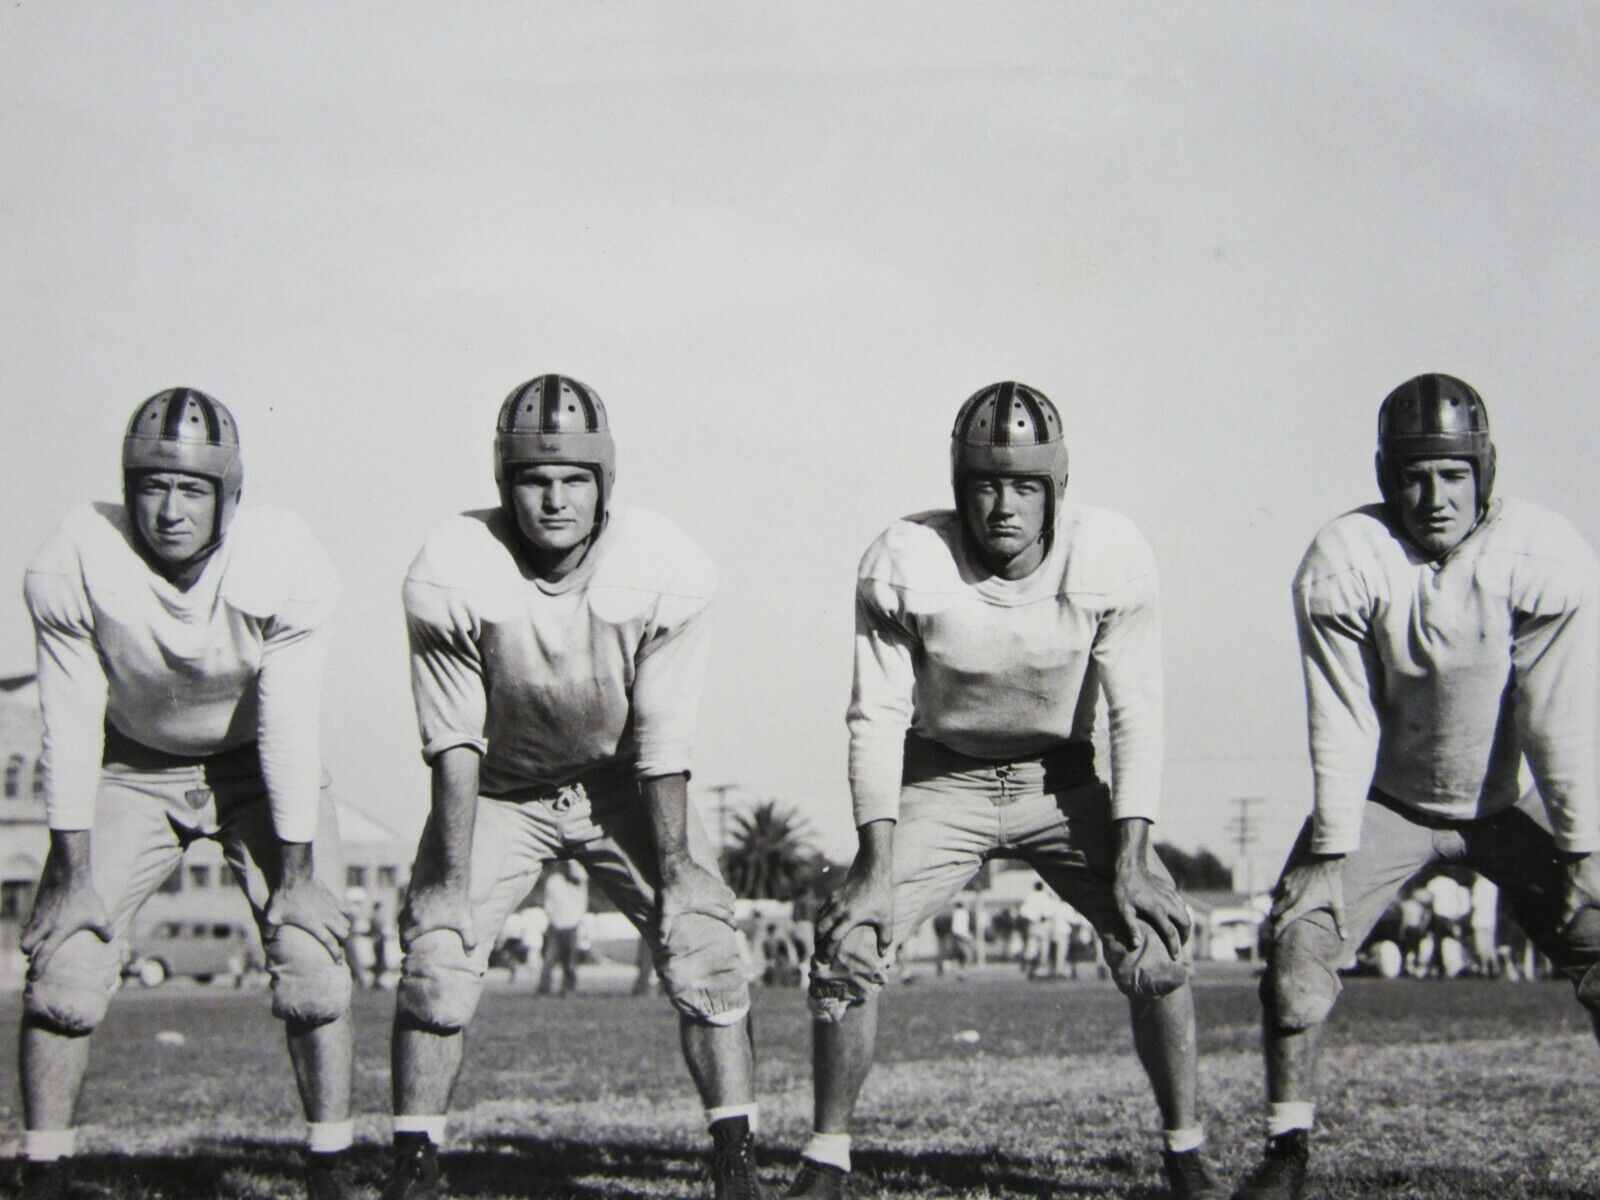 Vintage Venice High School CA Football Team Photo Leather Helmets Linemen 1940s